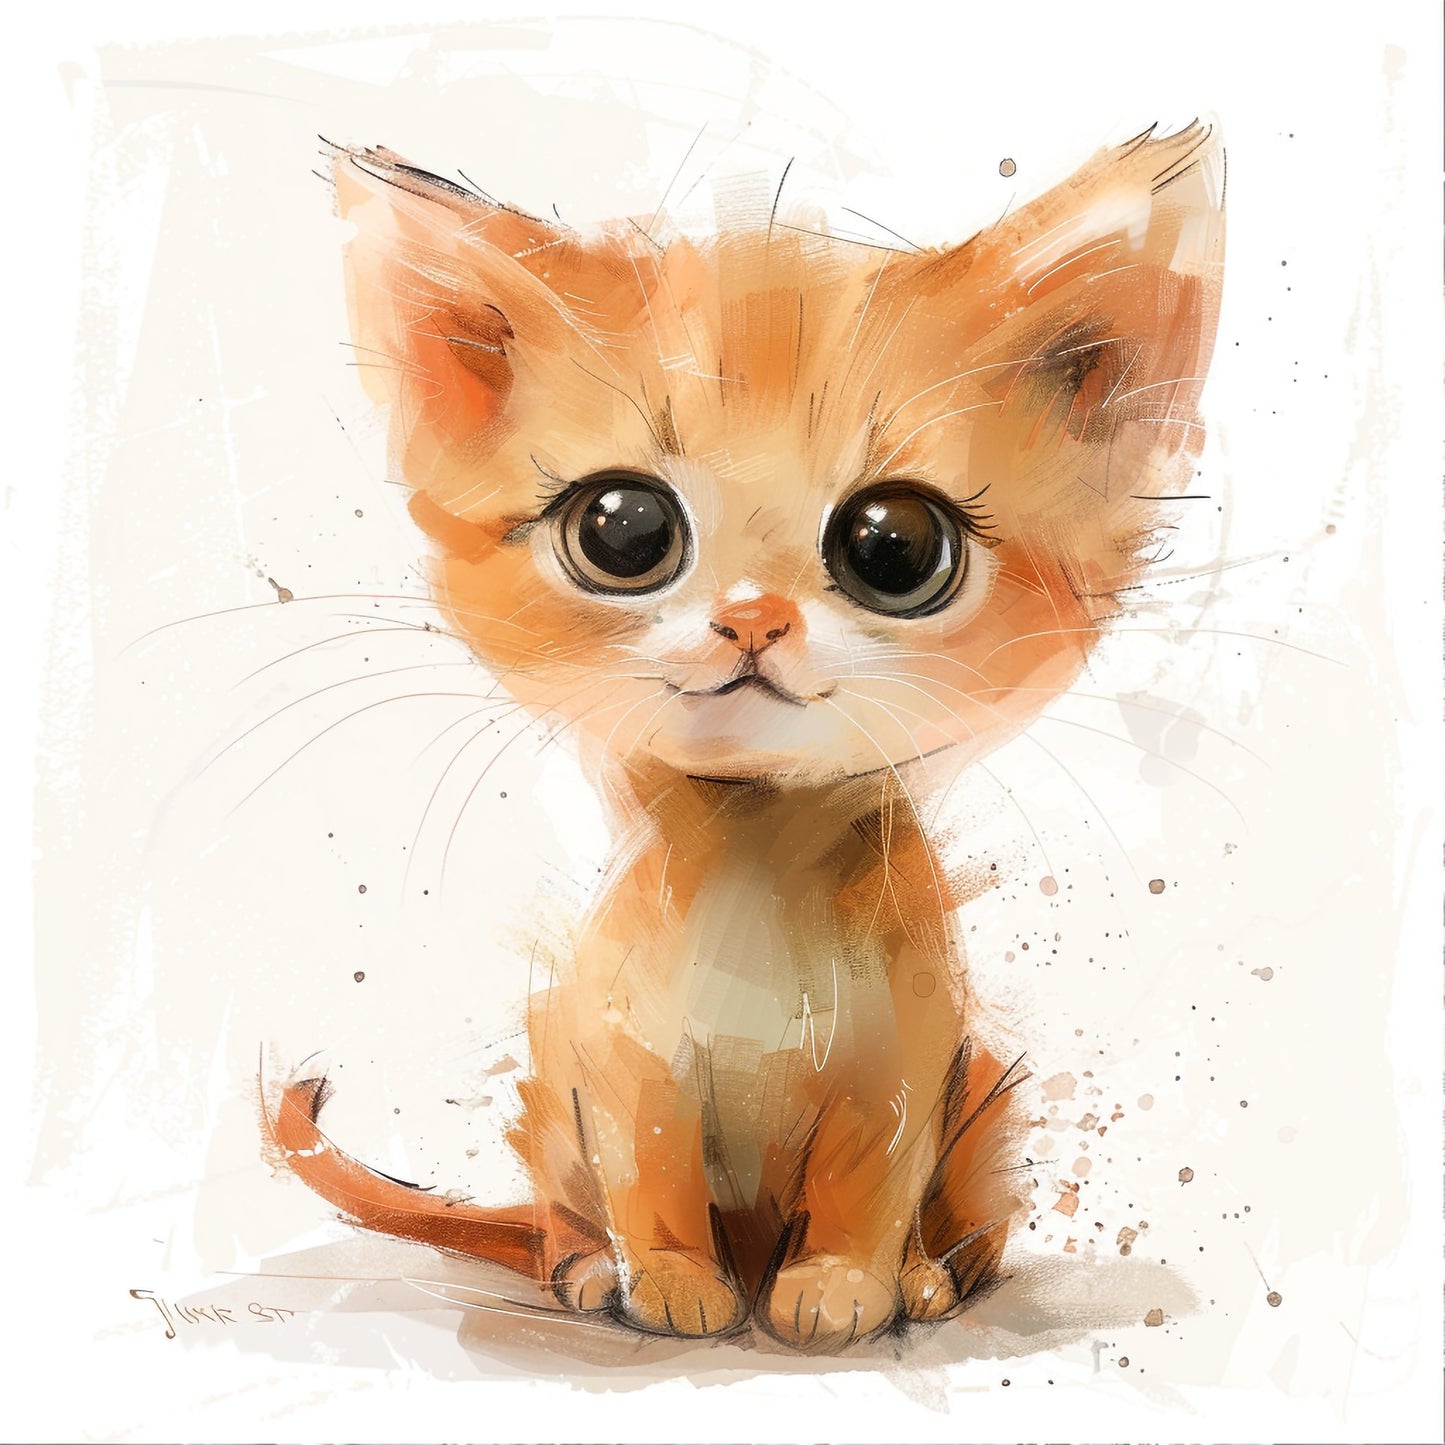 Adorable Watercolor Cartoon Kitten with Big Eyes